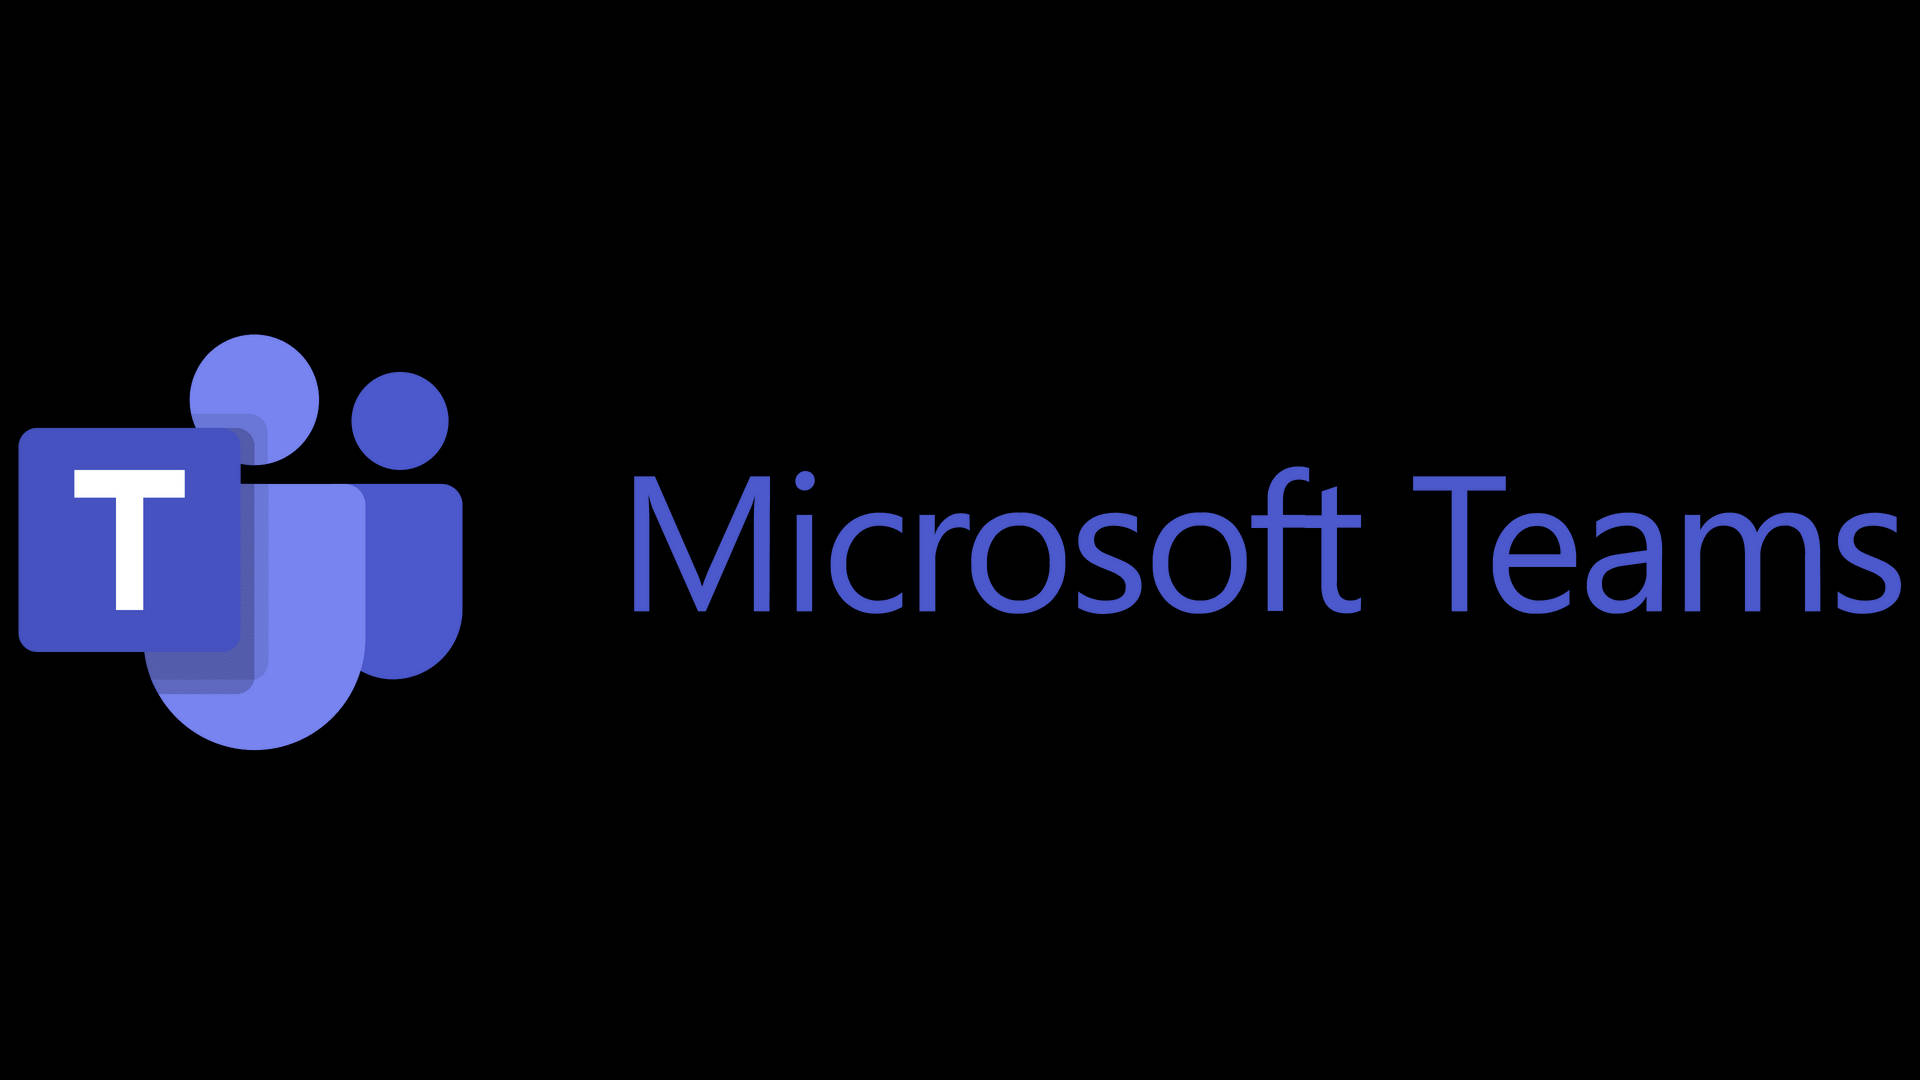 Microsoft Teams Company Logo Wallpaper